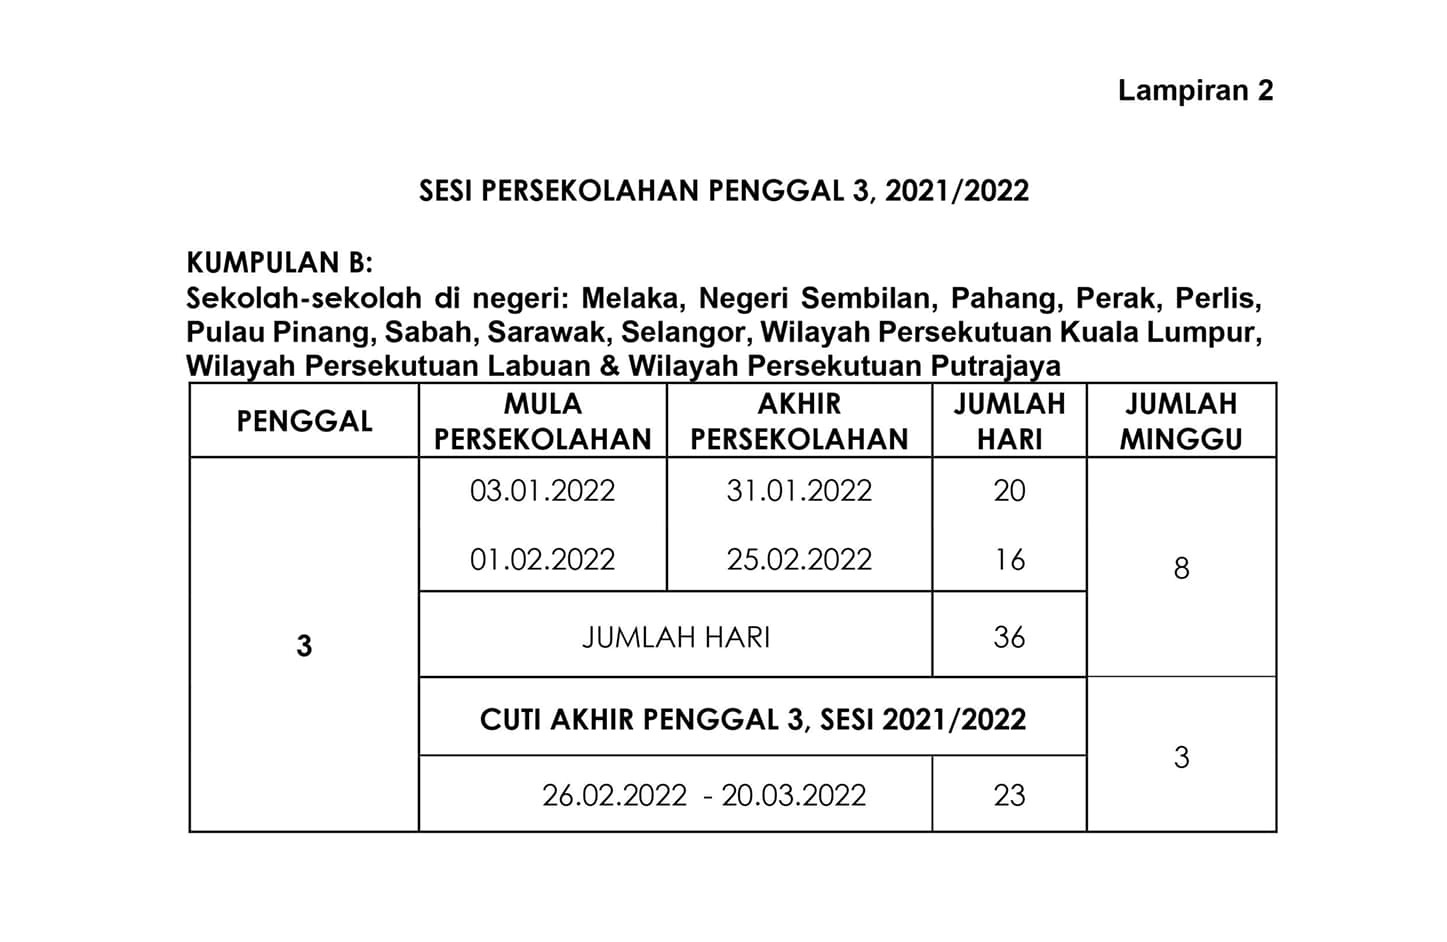 School calendar 2022 malaysia